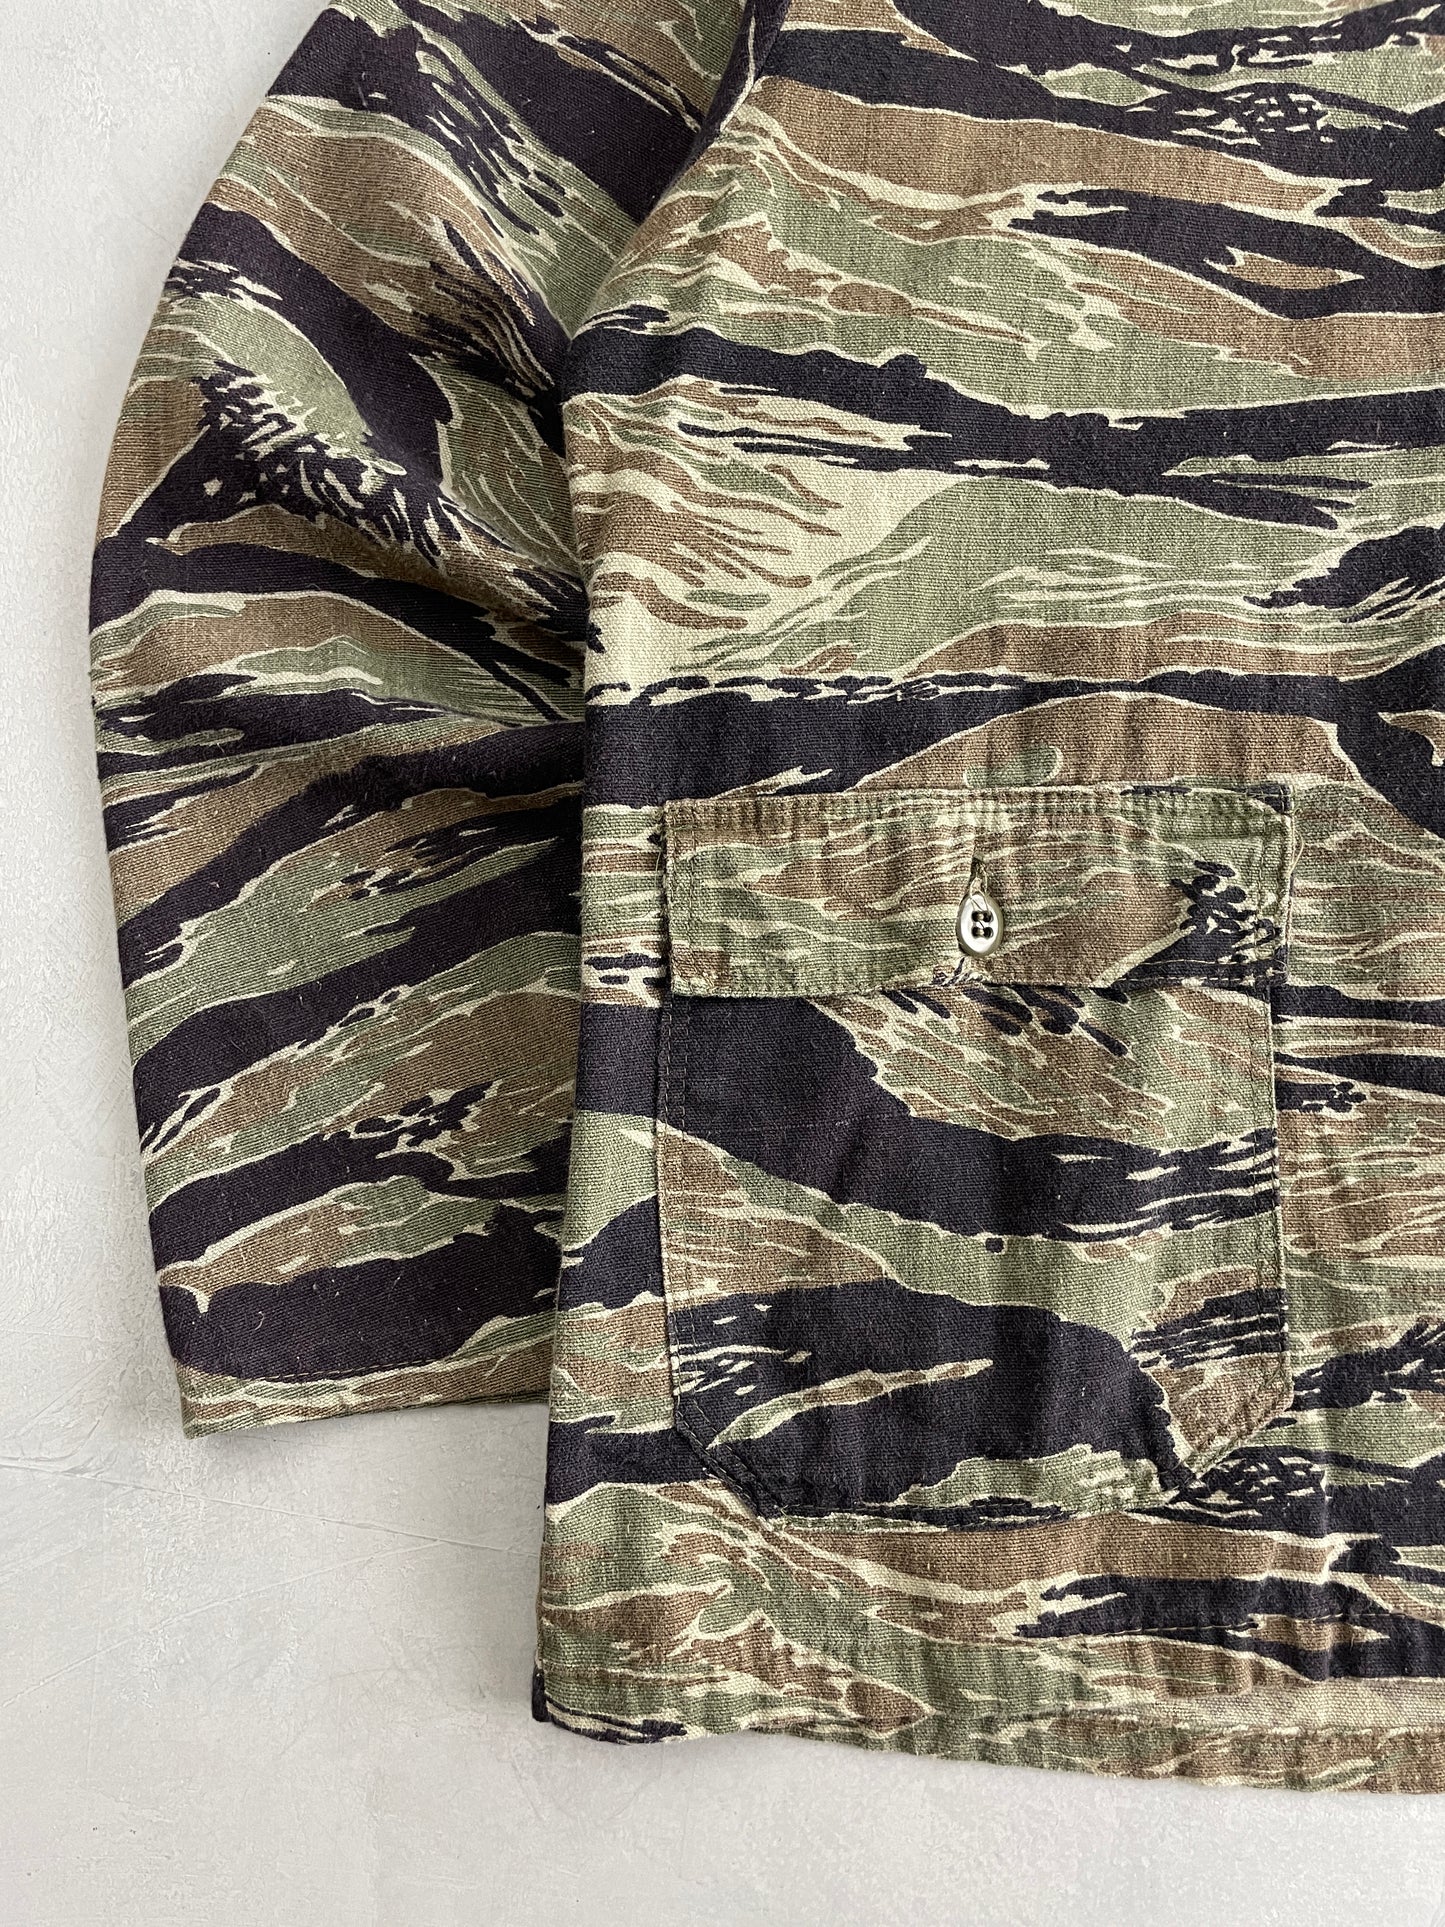 Tiger Stripe Camo Jacket [M/L]